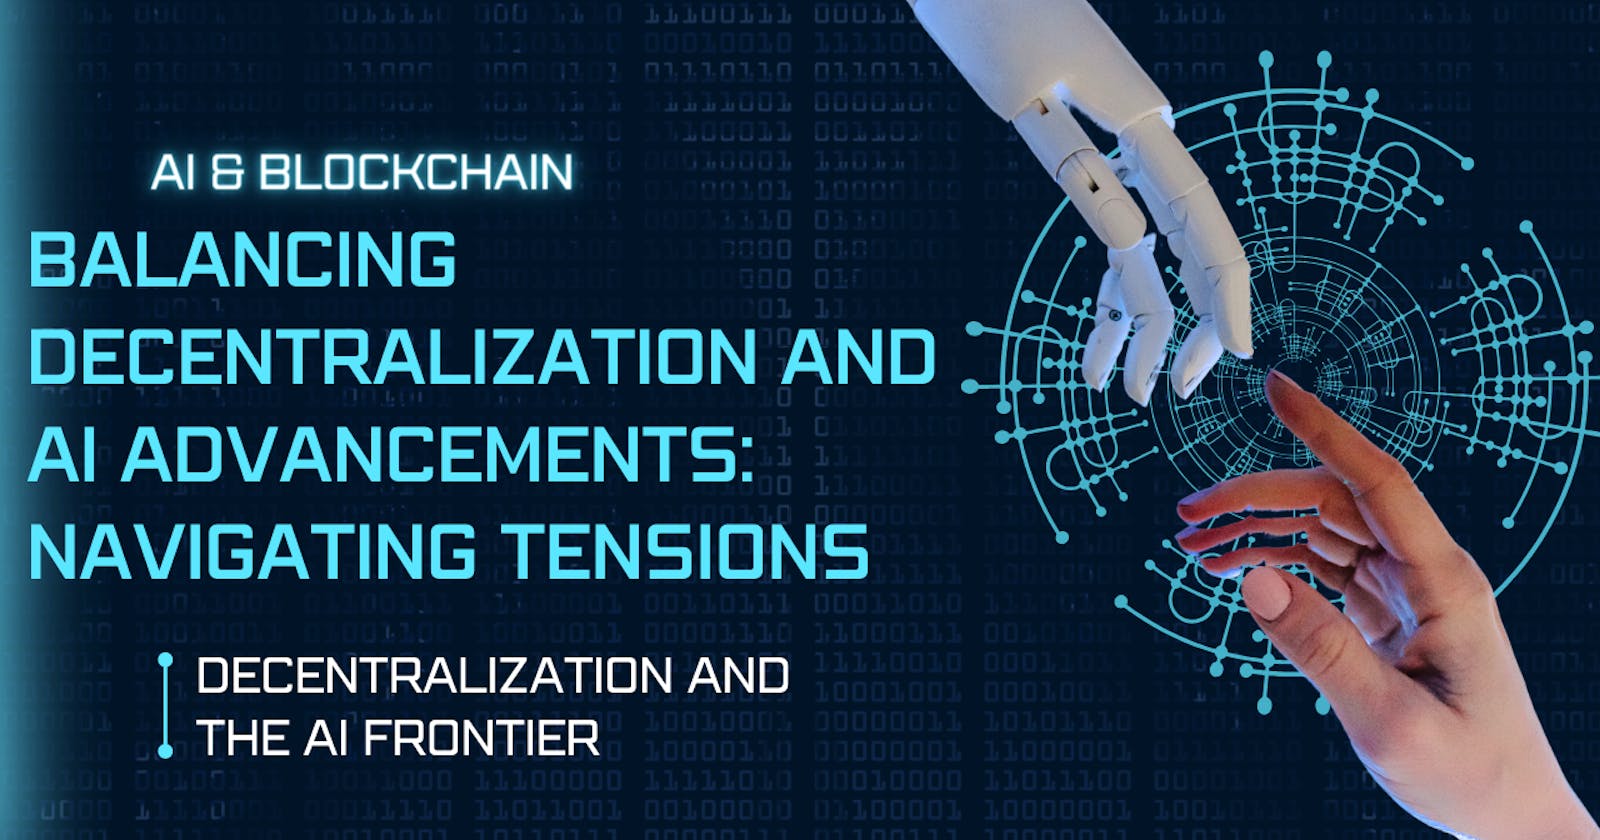 Balancing Decentralization and 
AI Advancements: Navigating Tensions